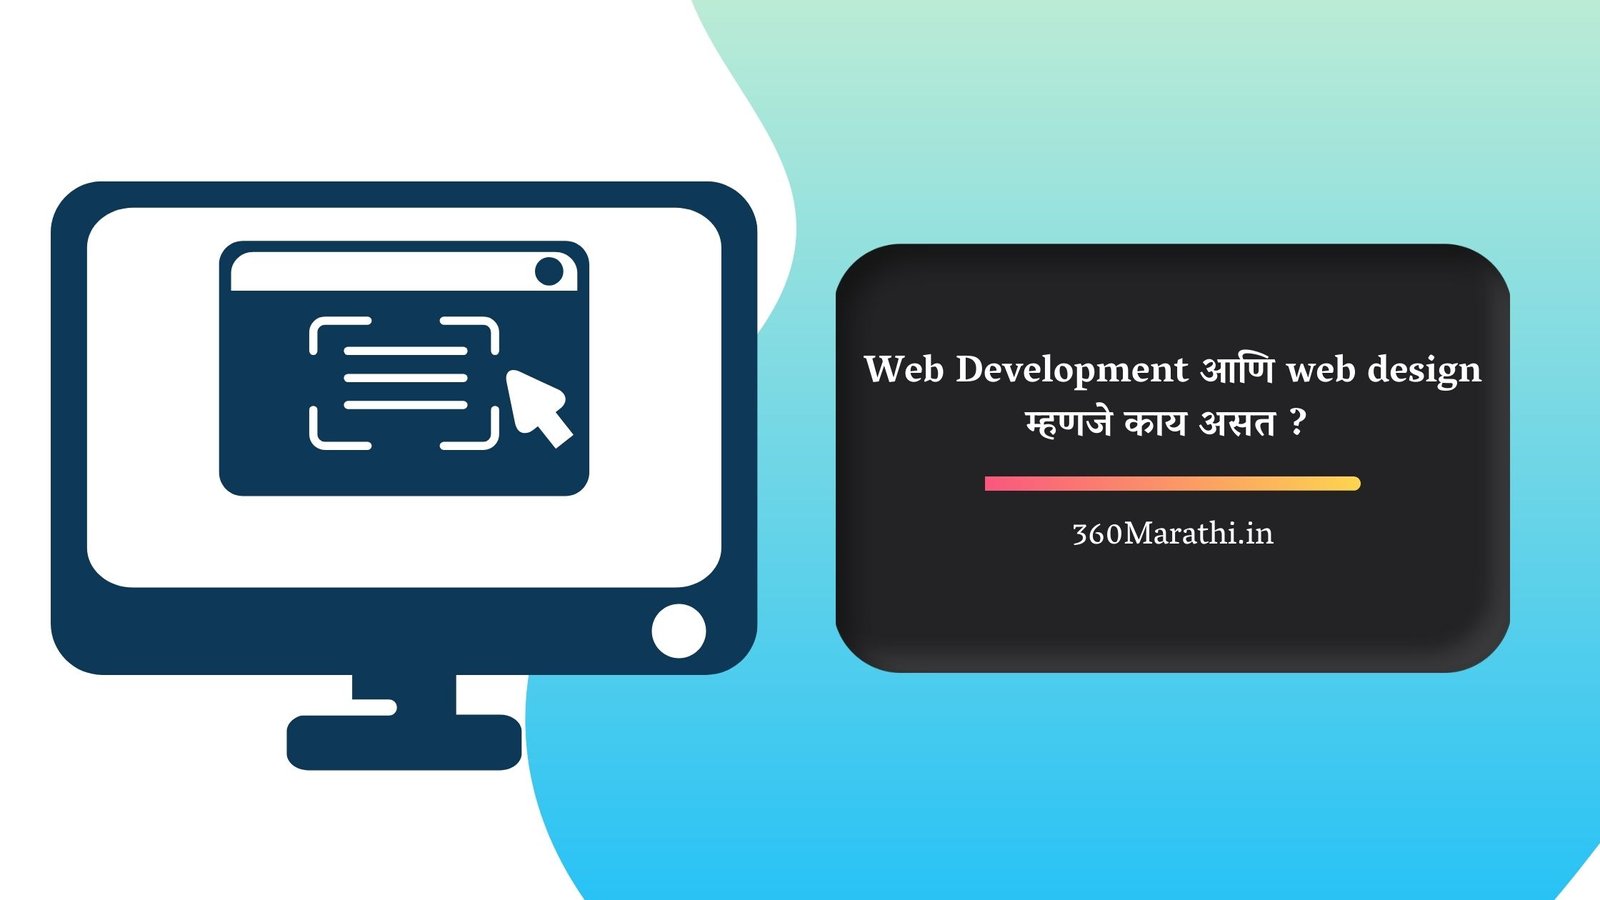 Web Development Information in Marathi